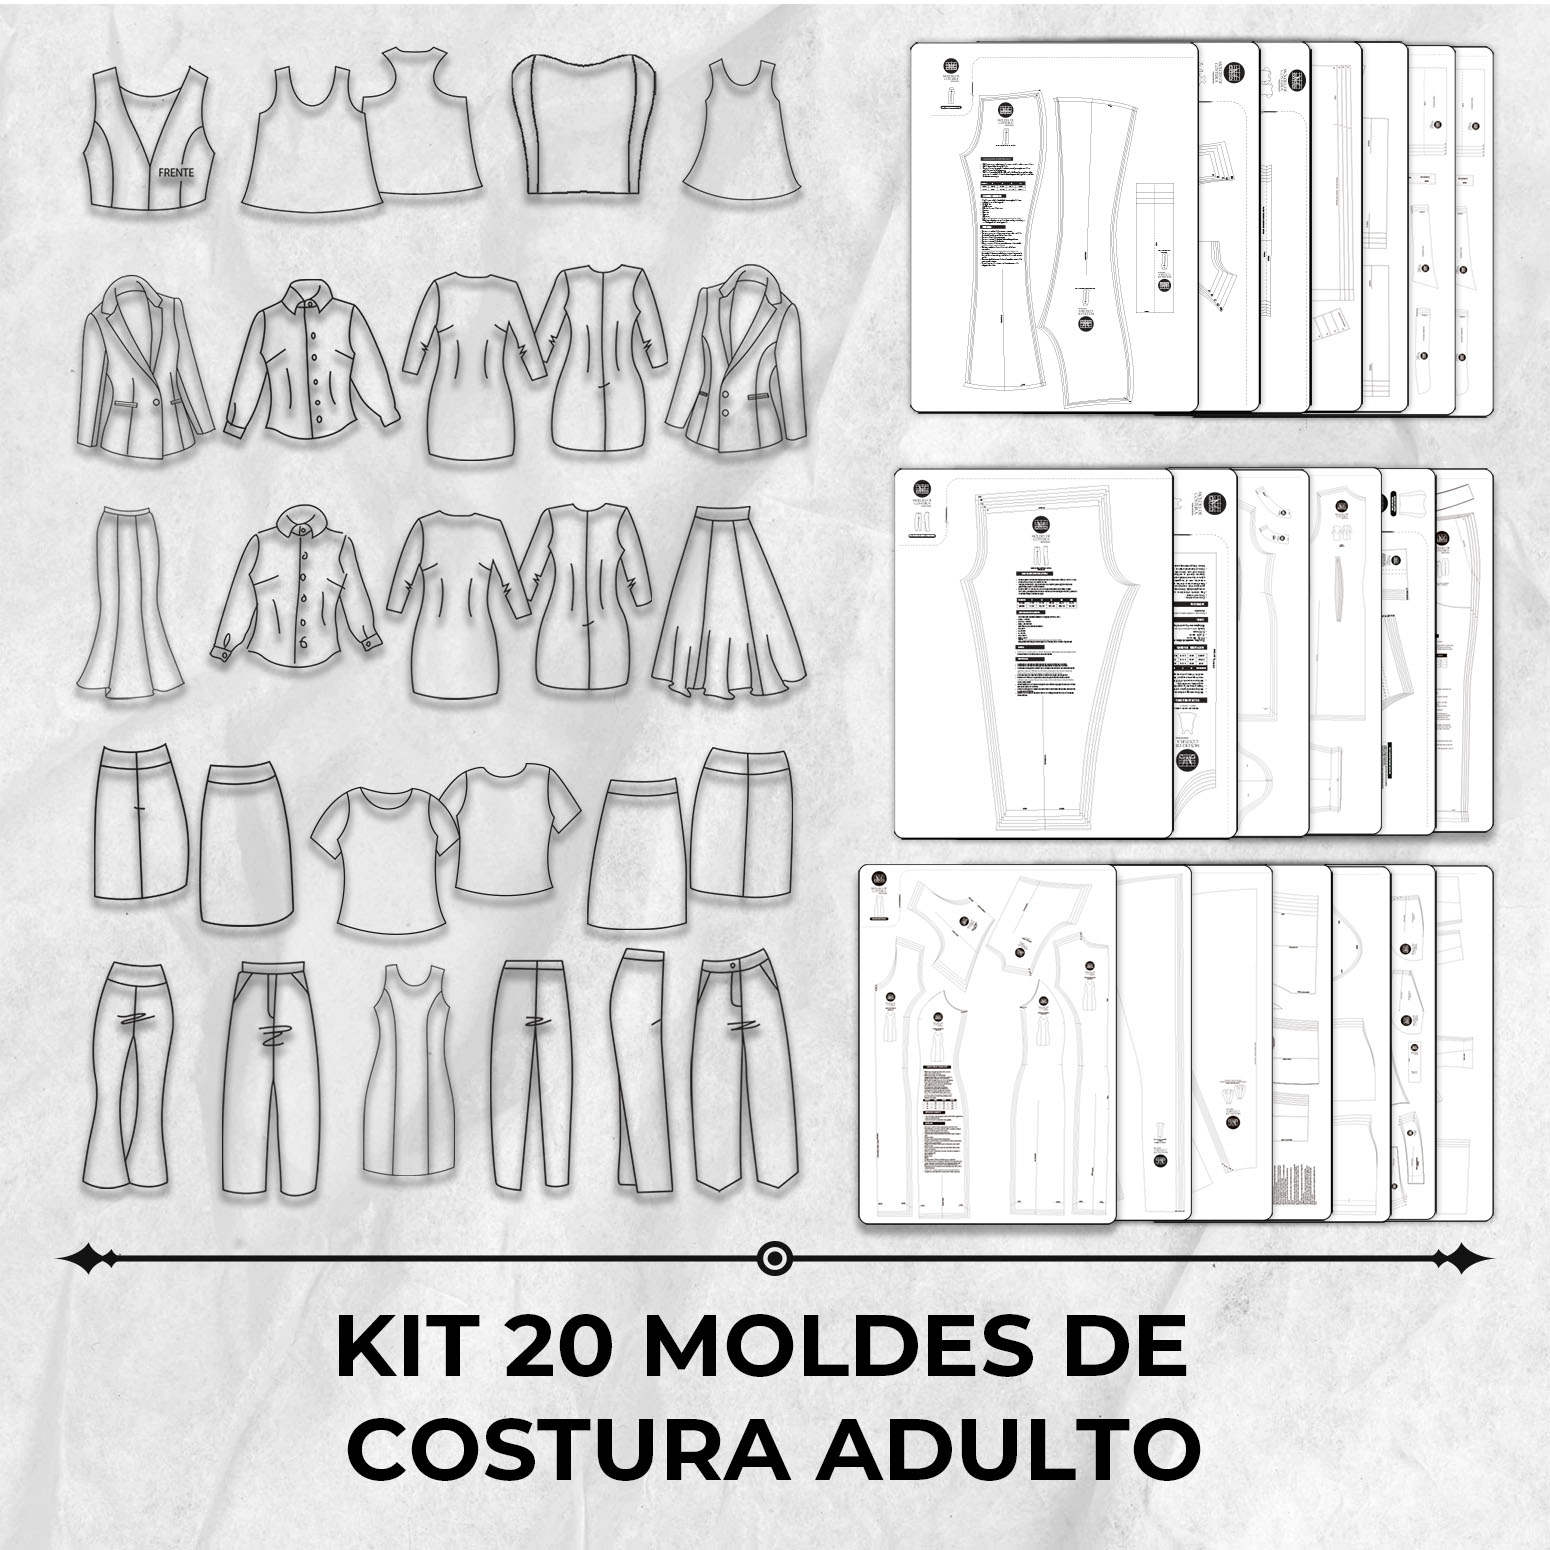 Kit 20 moldes de costura adulto by Marlene Mukai